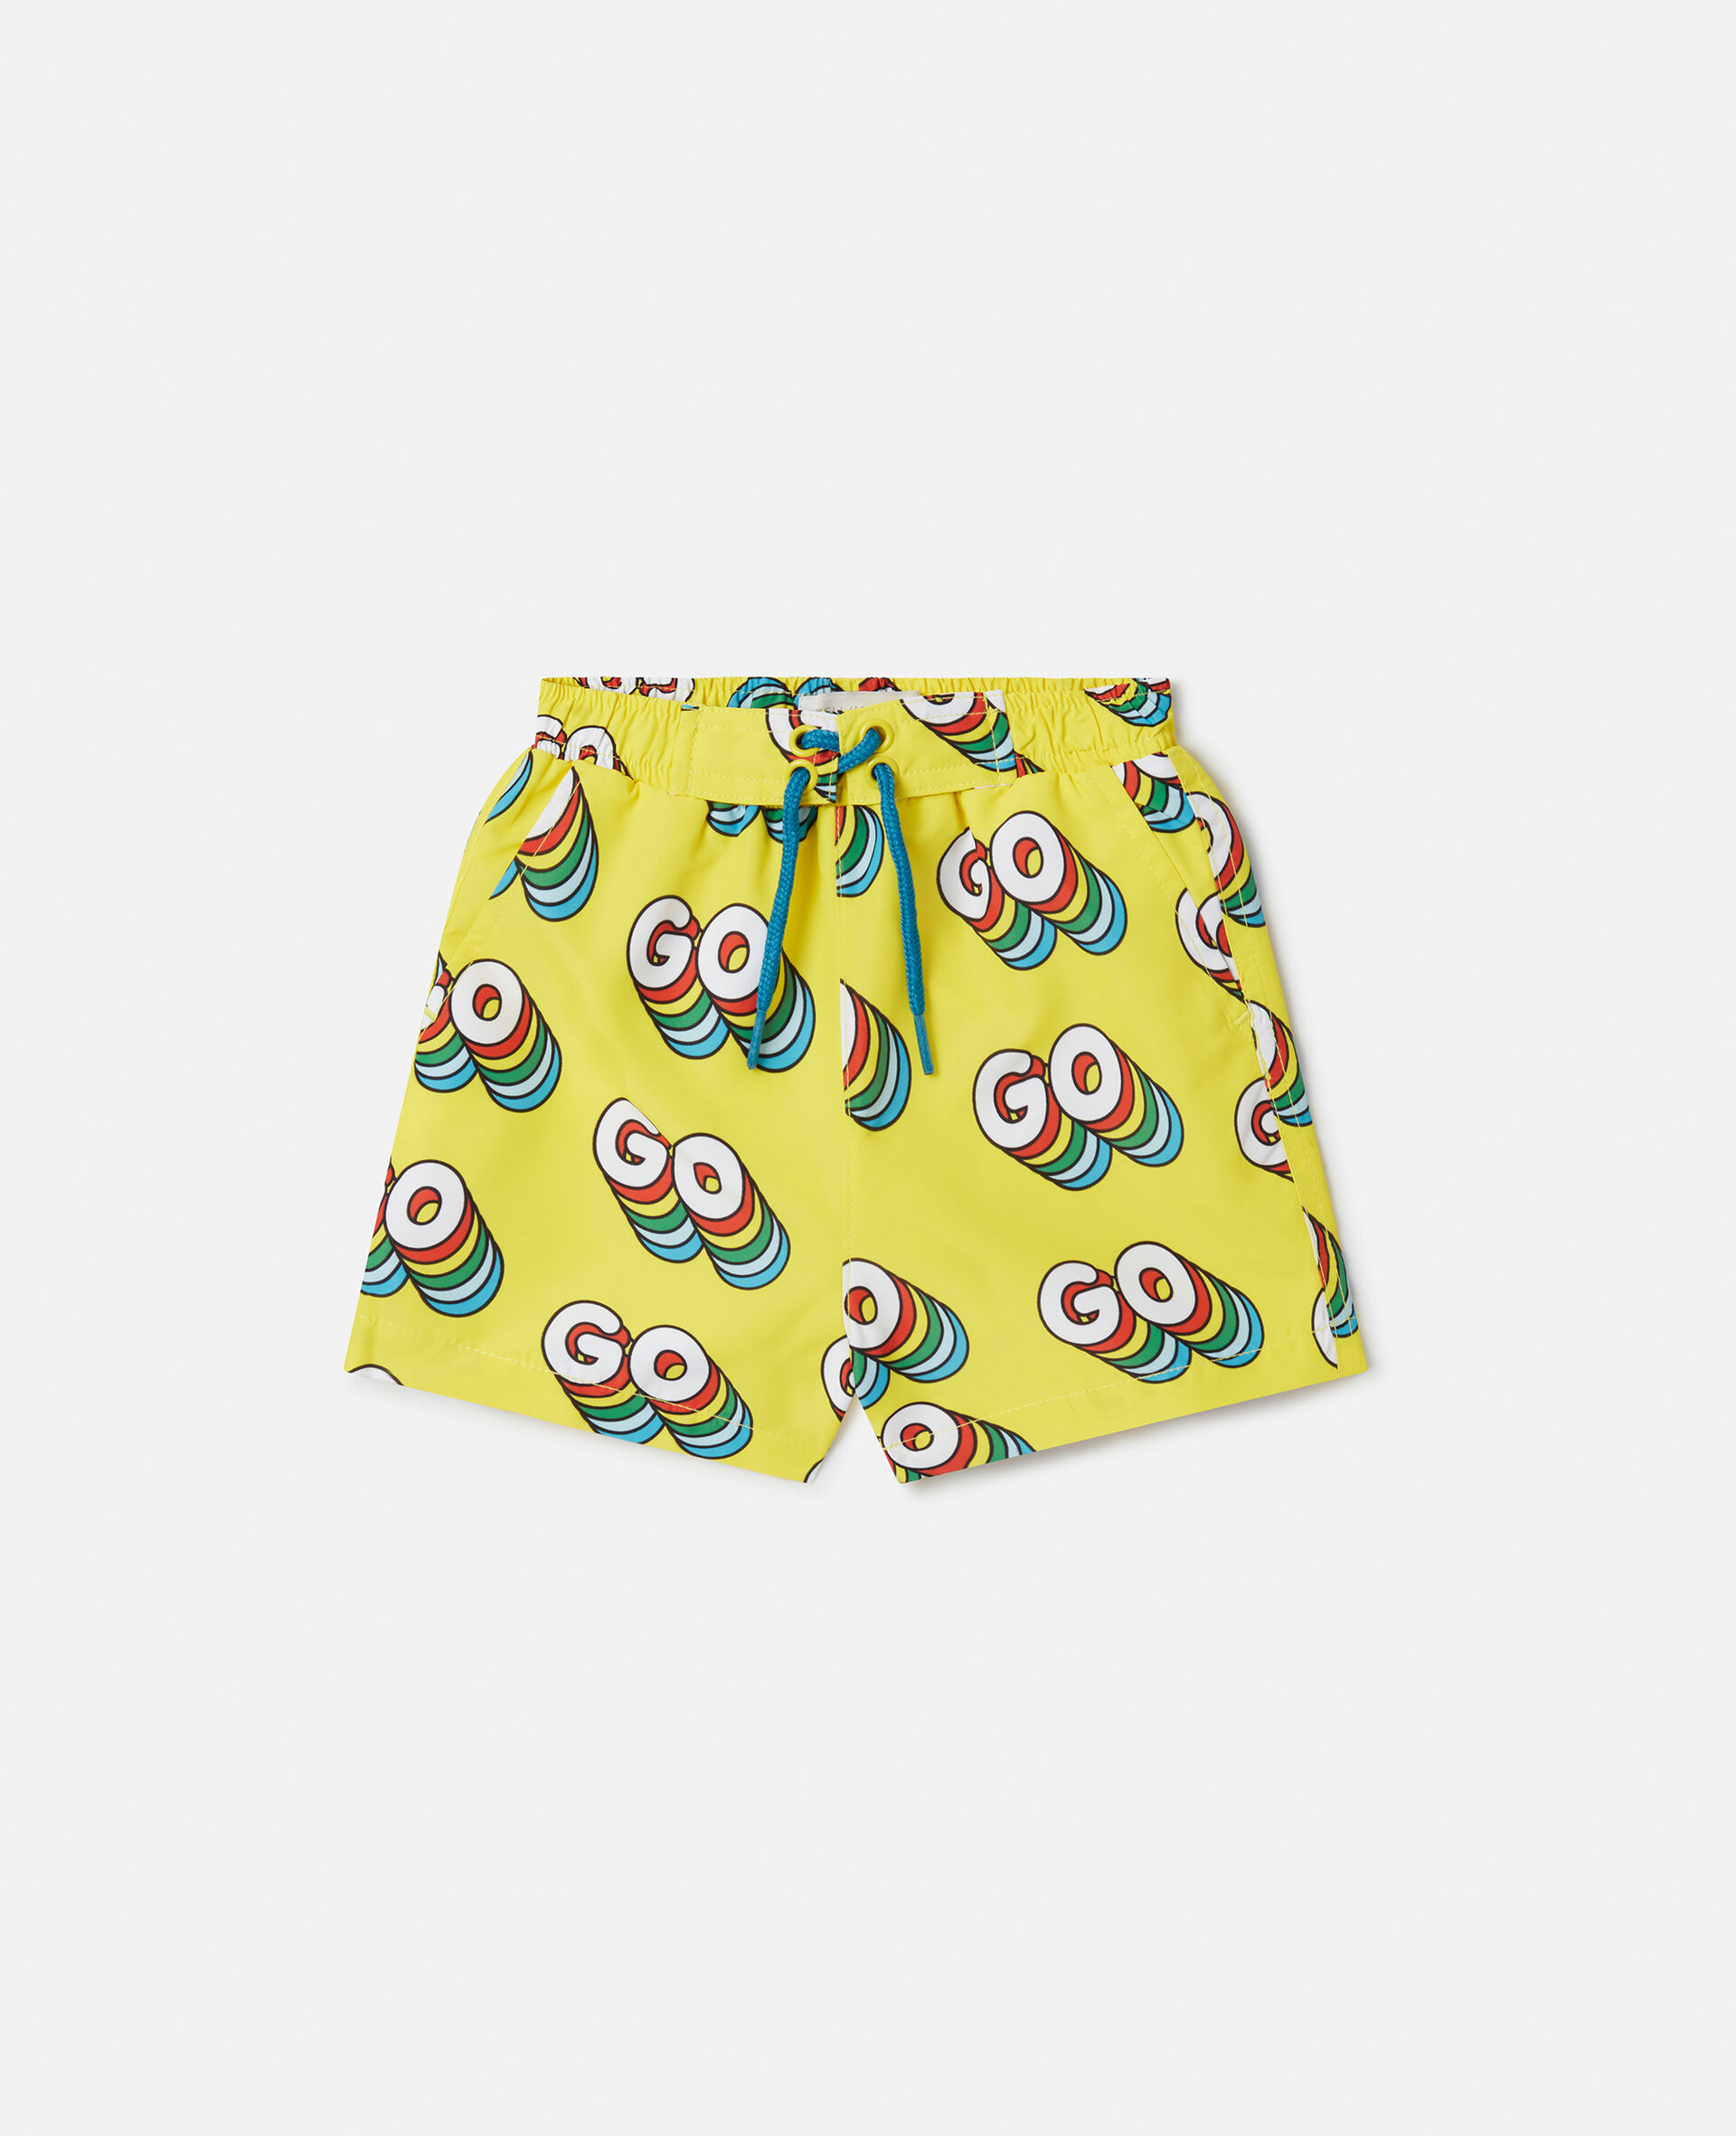 'GO' Print Swim Shorts-Multicolour-large image number 0